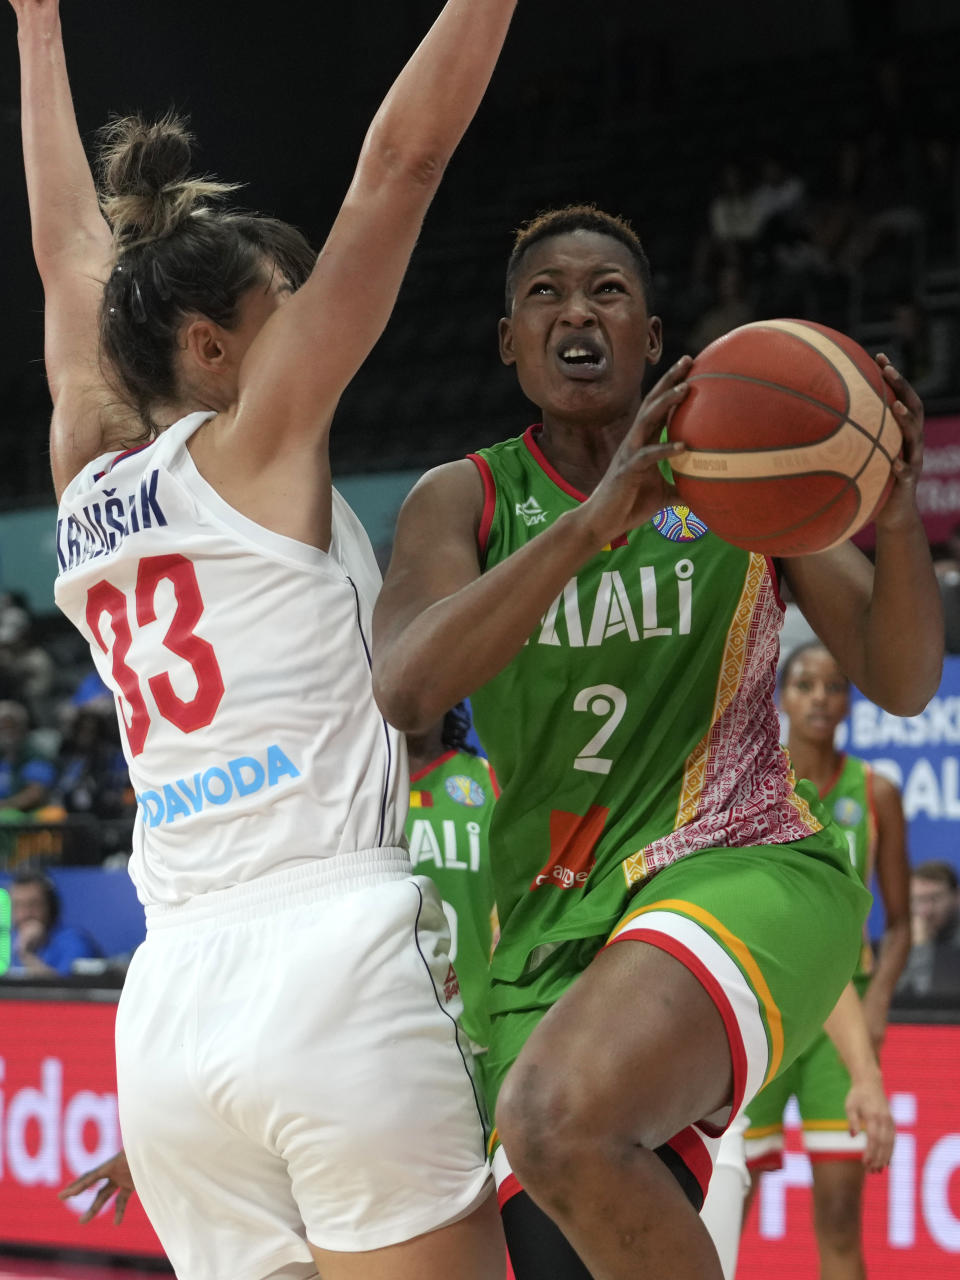 Mali's Salimatou Kourouma, right, is tries to lay up past Serbia's Tina Krajisnik during their game at the women's Basketball World Cup in Sydney, Australia, Monday, Sept. 26, 2022. (AP Photo/Rick Rycroft)